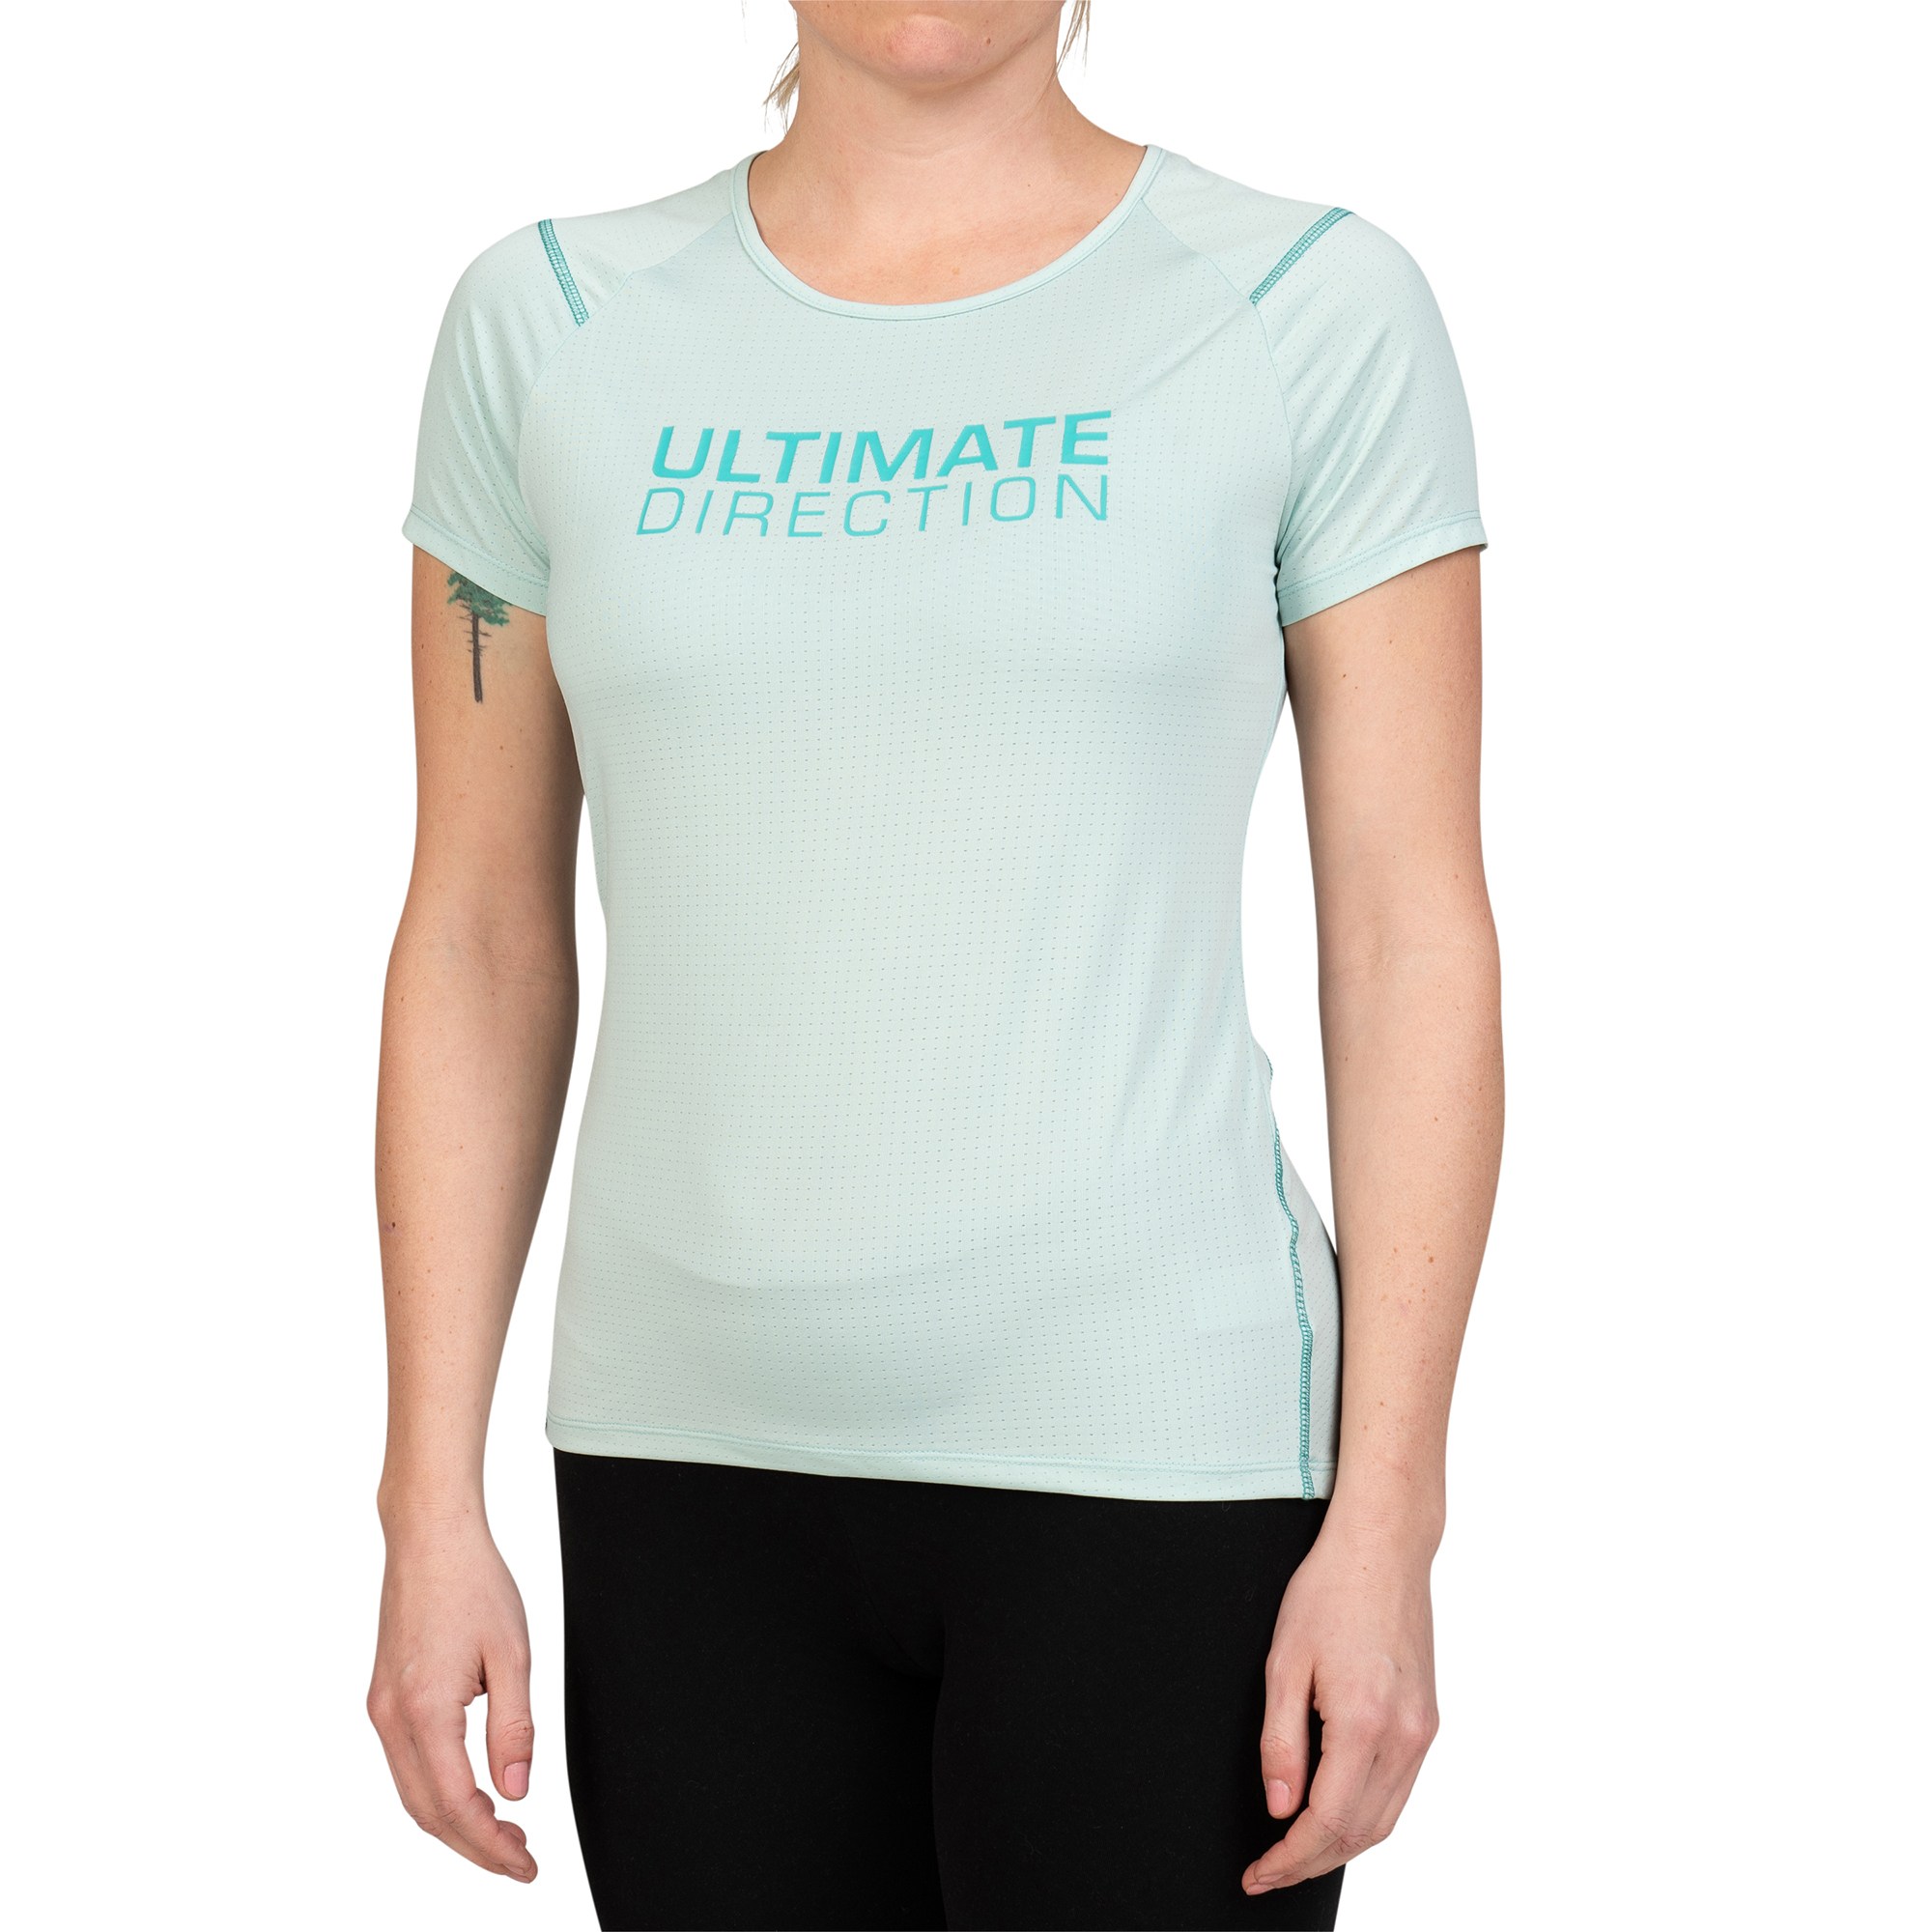 Ultimate Direction Women's Tech T-Shirt in Lichen Size Medium